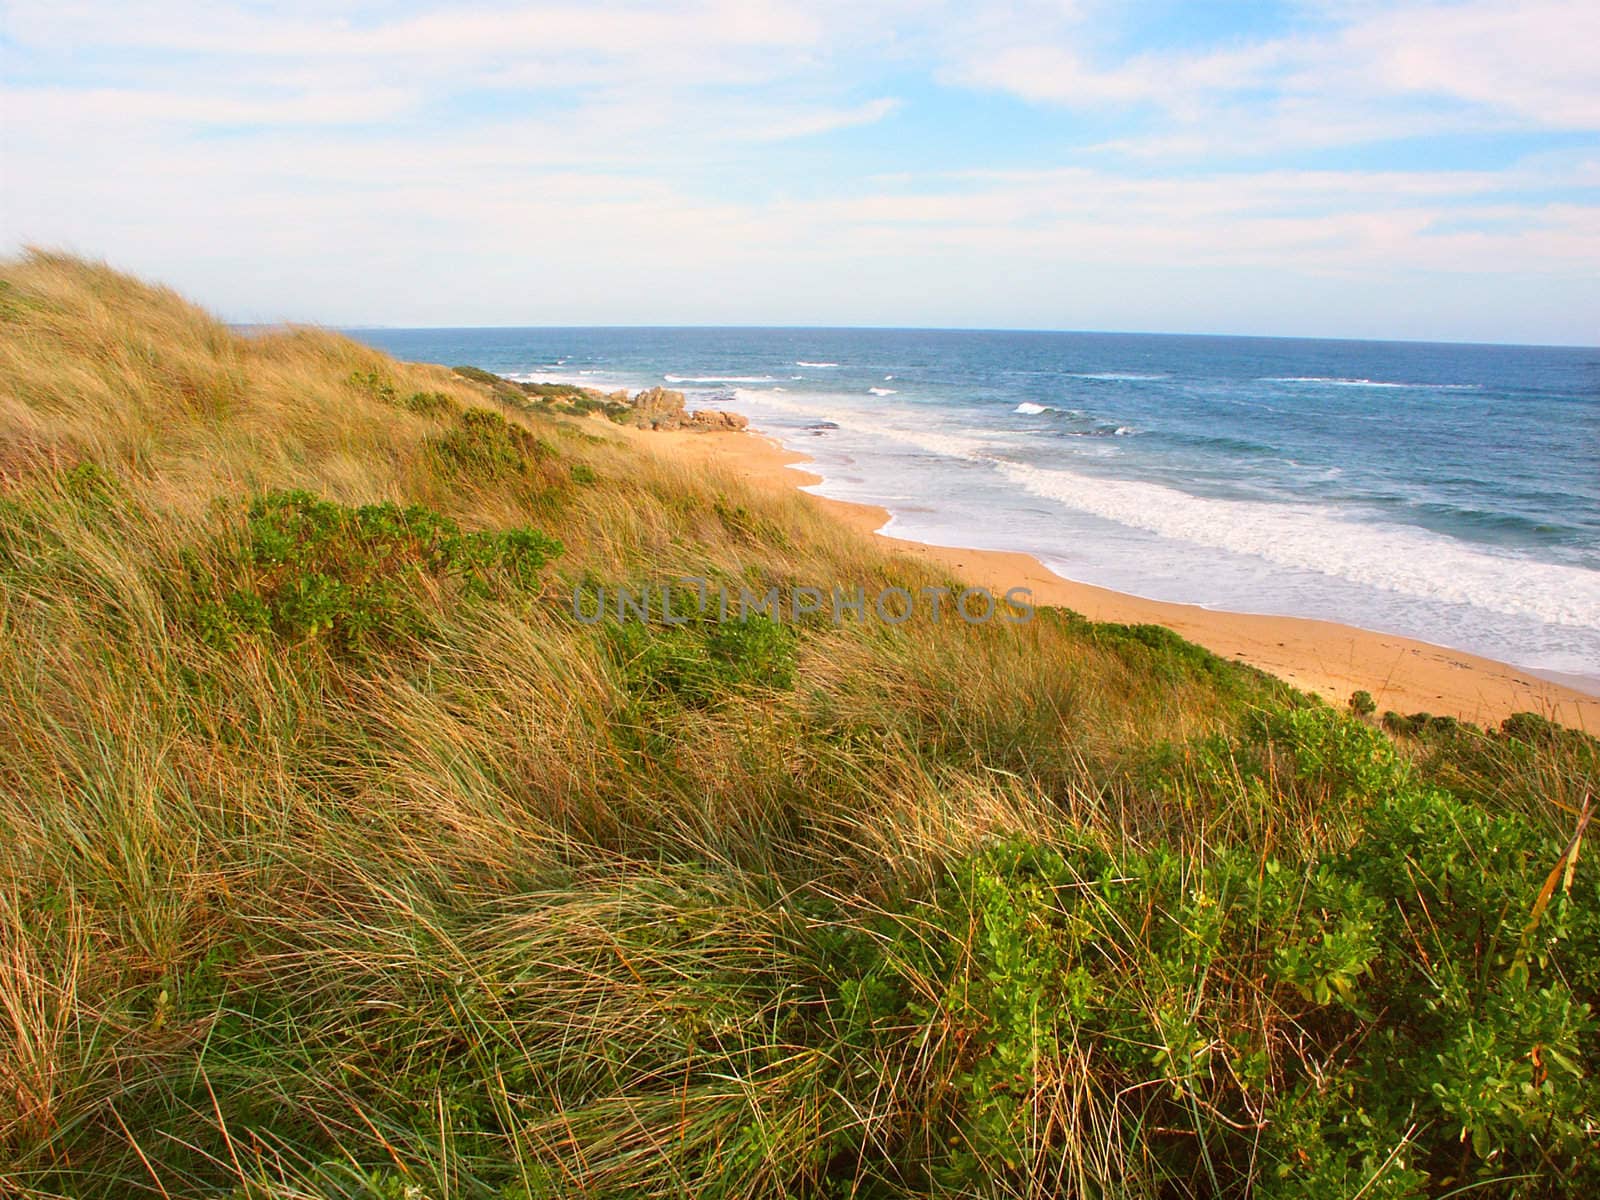 Pretty beach scene along the coastline of southern Australia near Warrnambool, Victoria.